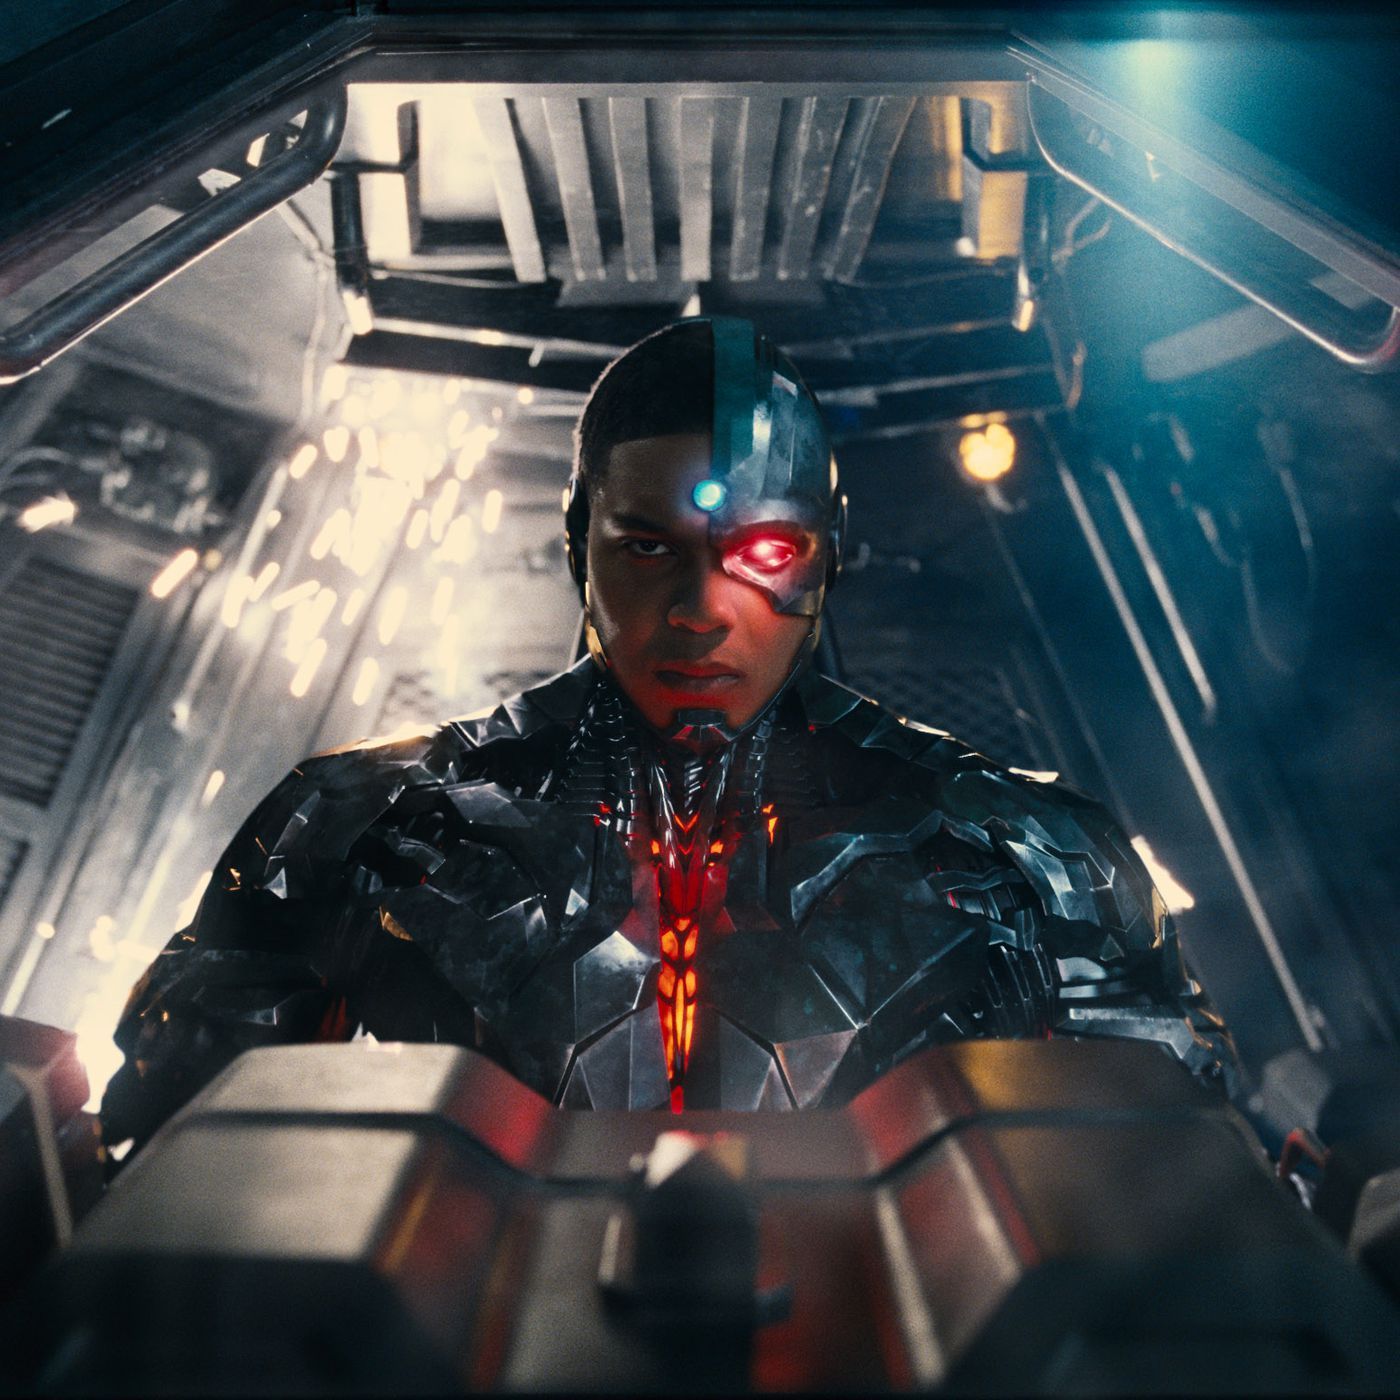 Cyborg is in the Batmobile.